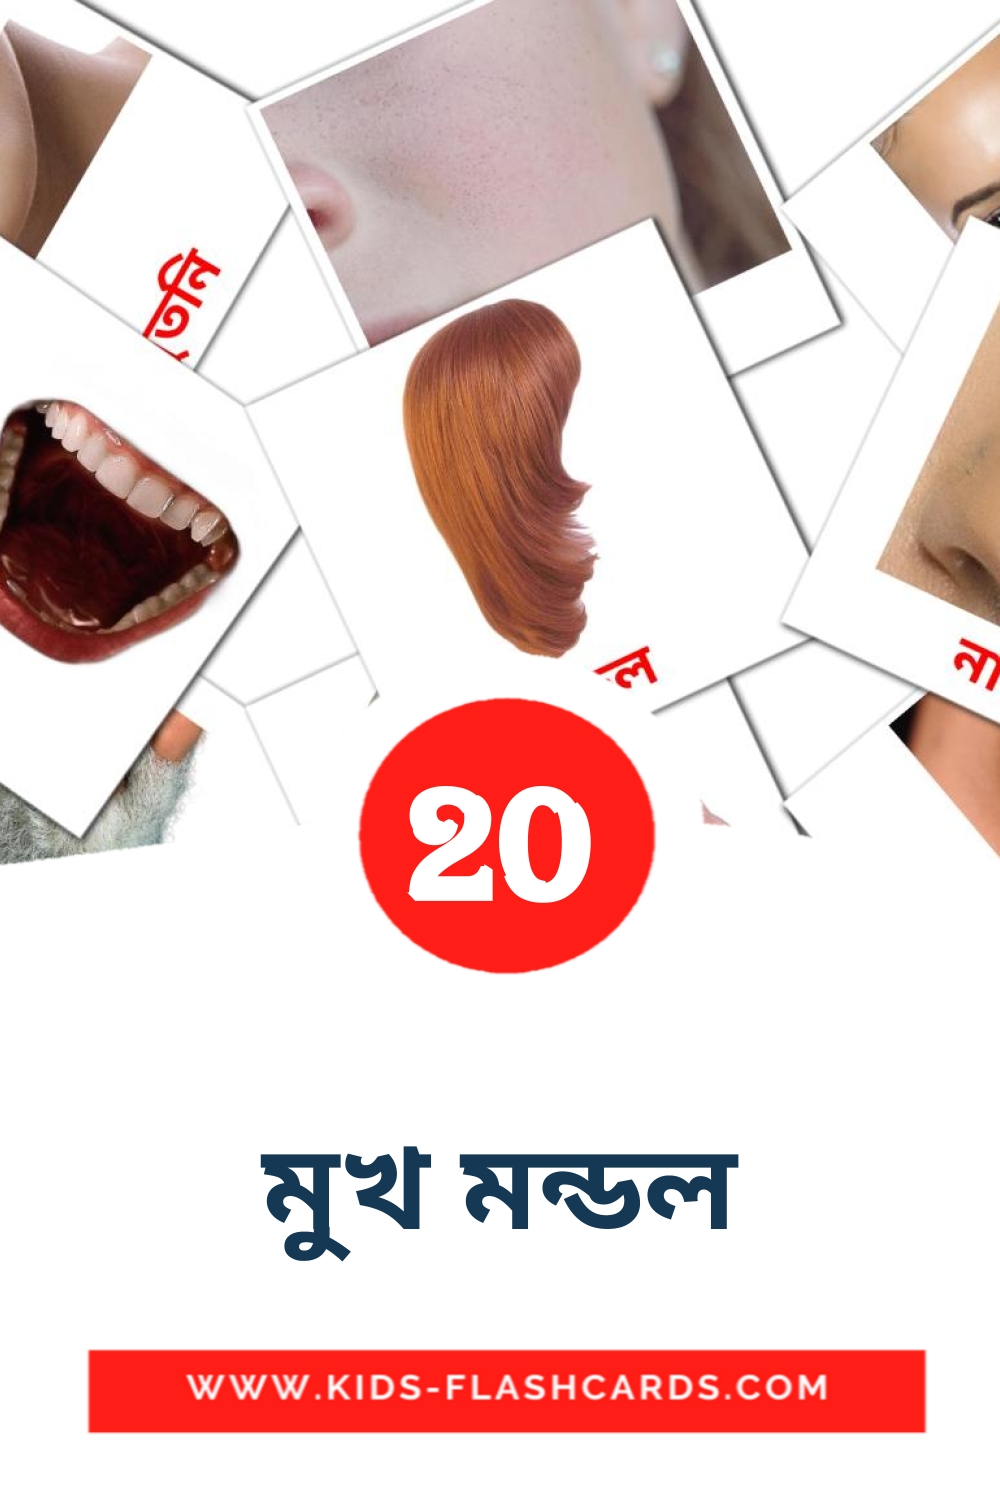 20 carte illustrate di মুখ মন্ডল per la scuola materna in bengalese